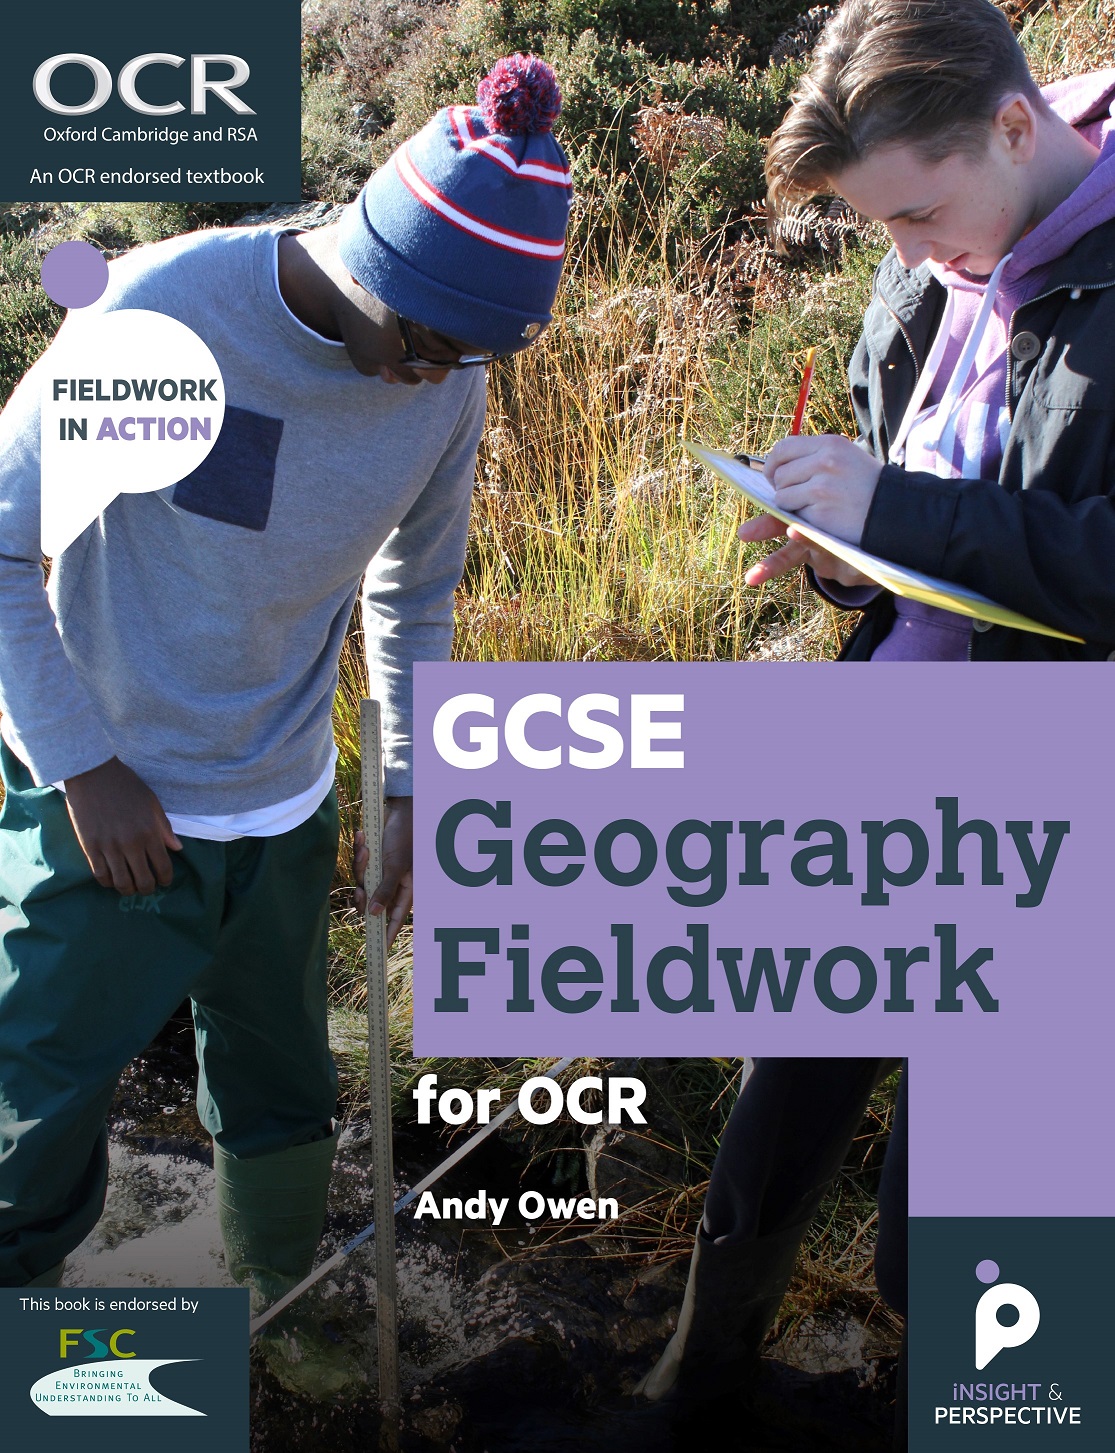 GCSE Geography Fieldwork for OCR